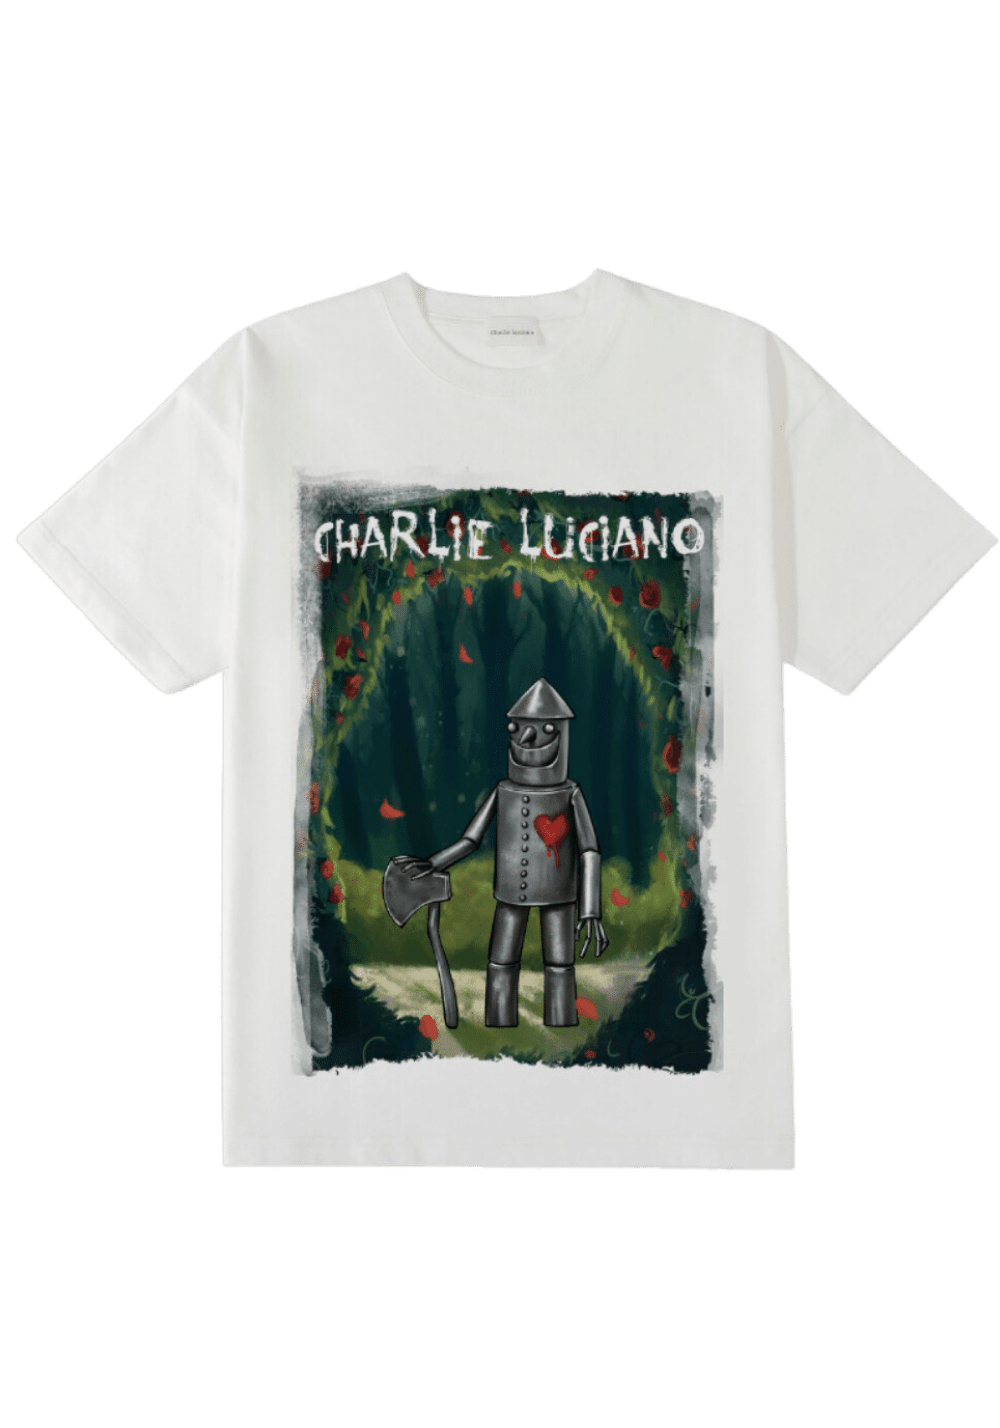 'Tin Man' Print T-Shirt - PSYLOS 1, 'Tin Man' Print T-Shirt, T-Shirt, Charlie Luciano, PSYLOS 1